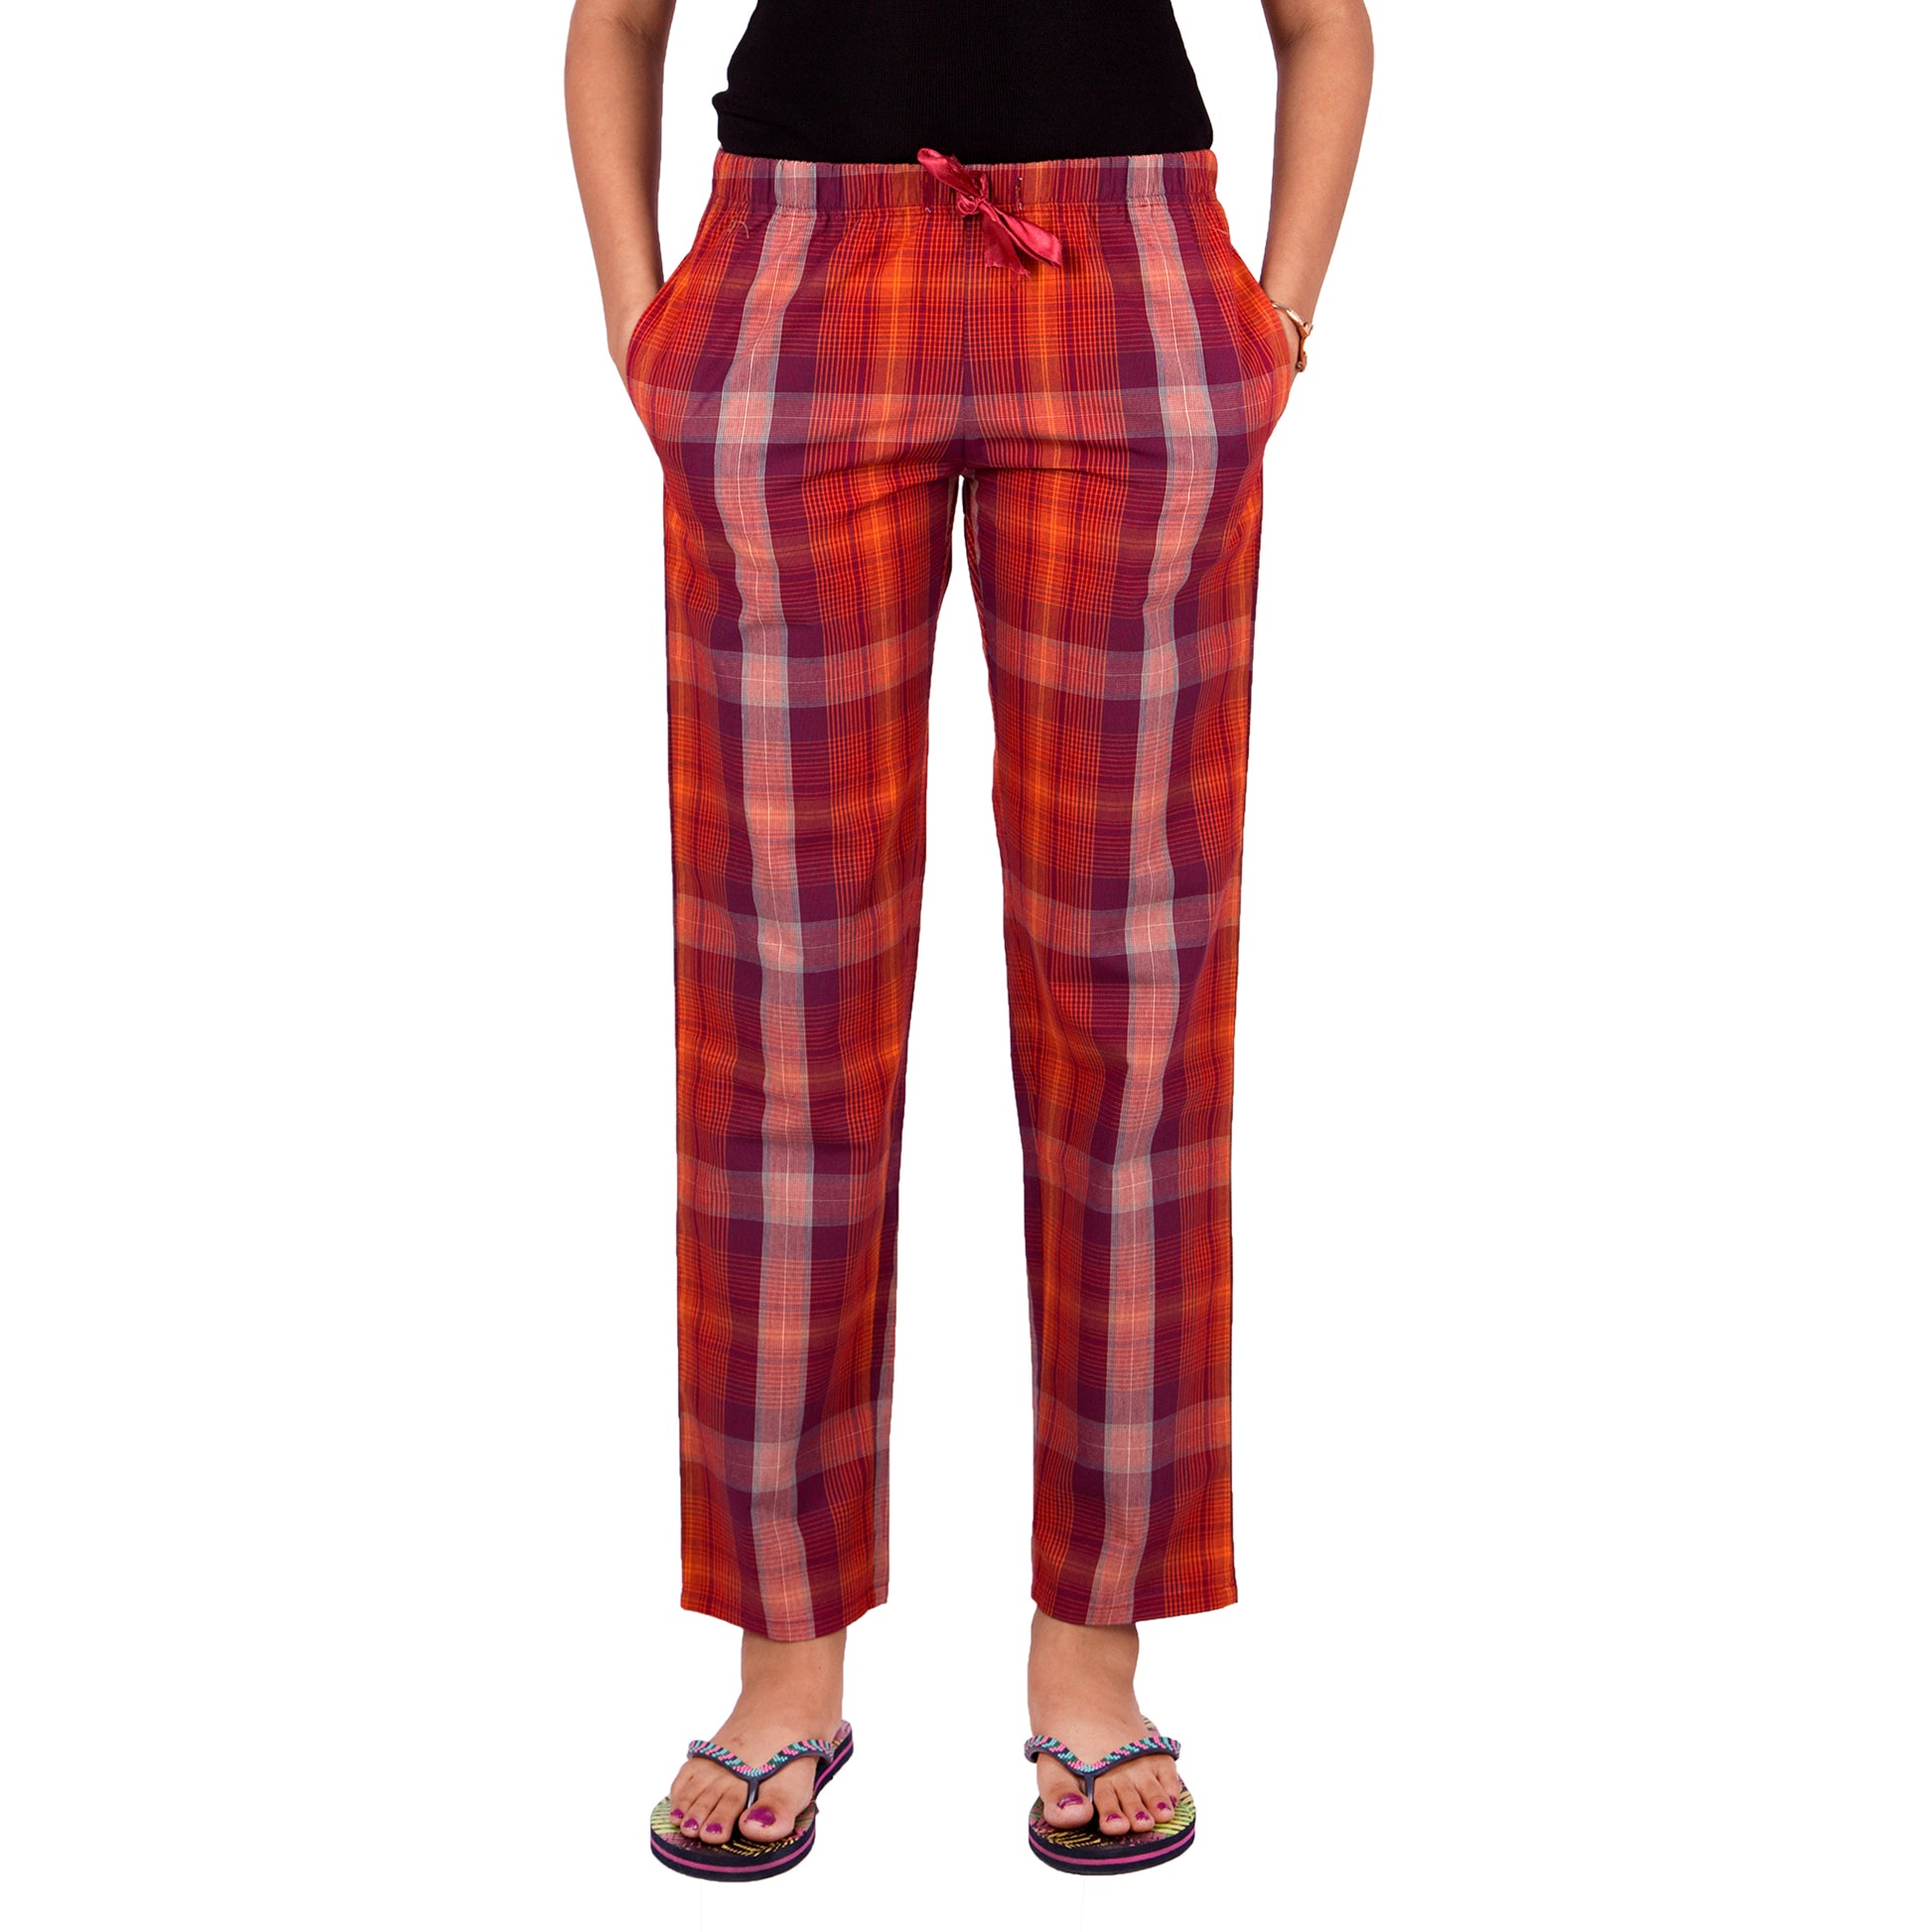 red-check-print-women's-pajamas-online